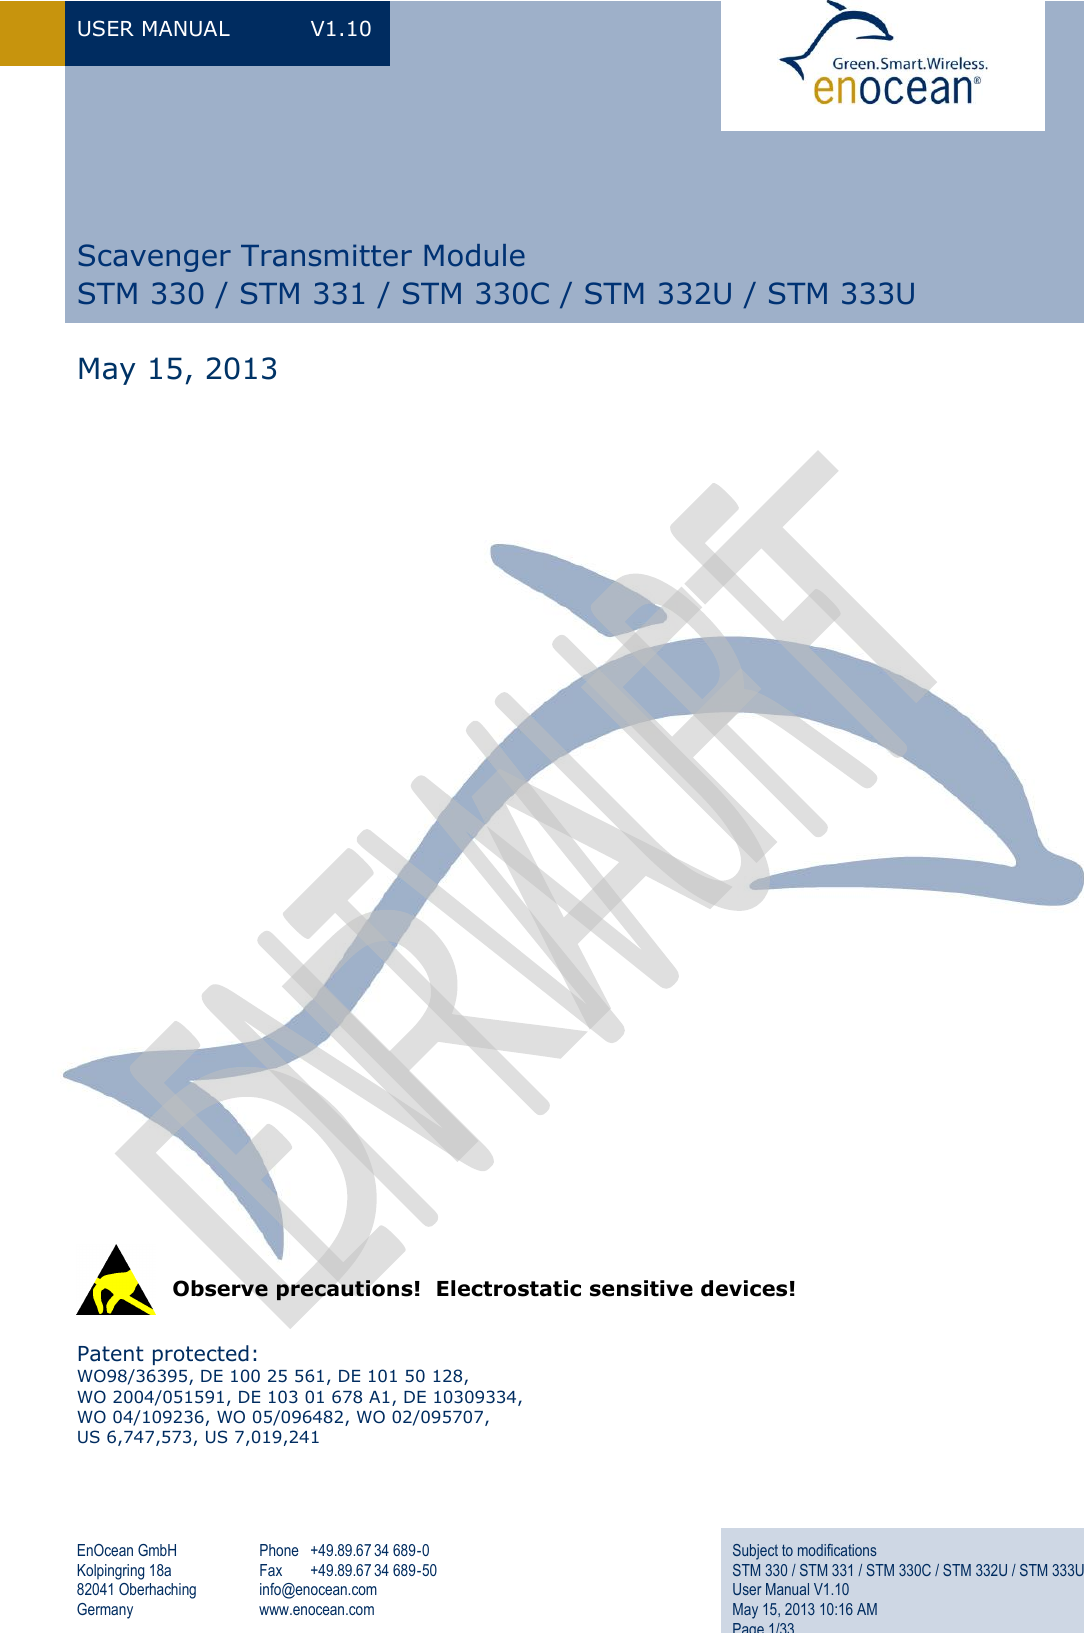 USER MANUAL  V1.10 EnOcean GmbH Kolpingring 18a 82041 Oberhaching Germany Phone  +49.89.67 34 689-0 Fax  +49.89.67 34 689-50 info@enocean.com www.enocean.com Subject to modifications STM 330 / STM 331 / STM 330C / STM 332U / STM 333U User Manual V1.10 May 15, 2013 10:16 AM Page 1/33                                   Patent protected: WO98/36395, DE 100 25 561, DE 101 50 128,  WO 2004/051591, DE 103 01 678 A1, DE 10309334,  WO 04/109236, WO 05/096482, WO 02/095707, US 6,747,573, US 7,019,241    Observe precautions!  Electrostatic sensitive devices! Scavenger Transmitter Module STM 330 / STM 331 / STM 330C / STM 332U / STM 333U    May 15, 2013 